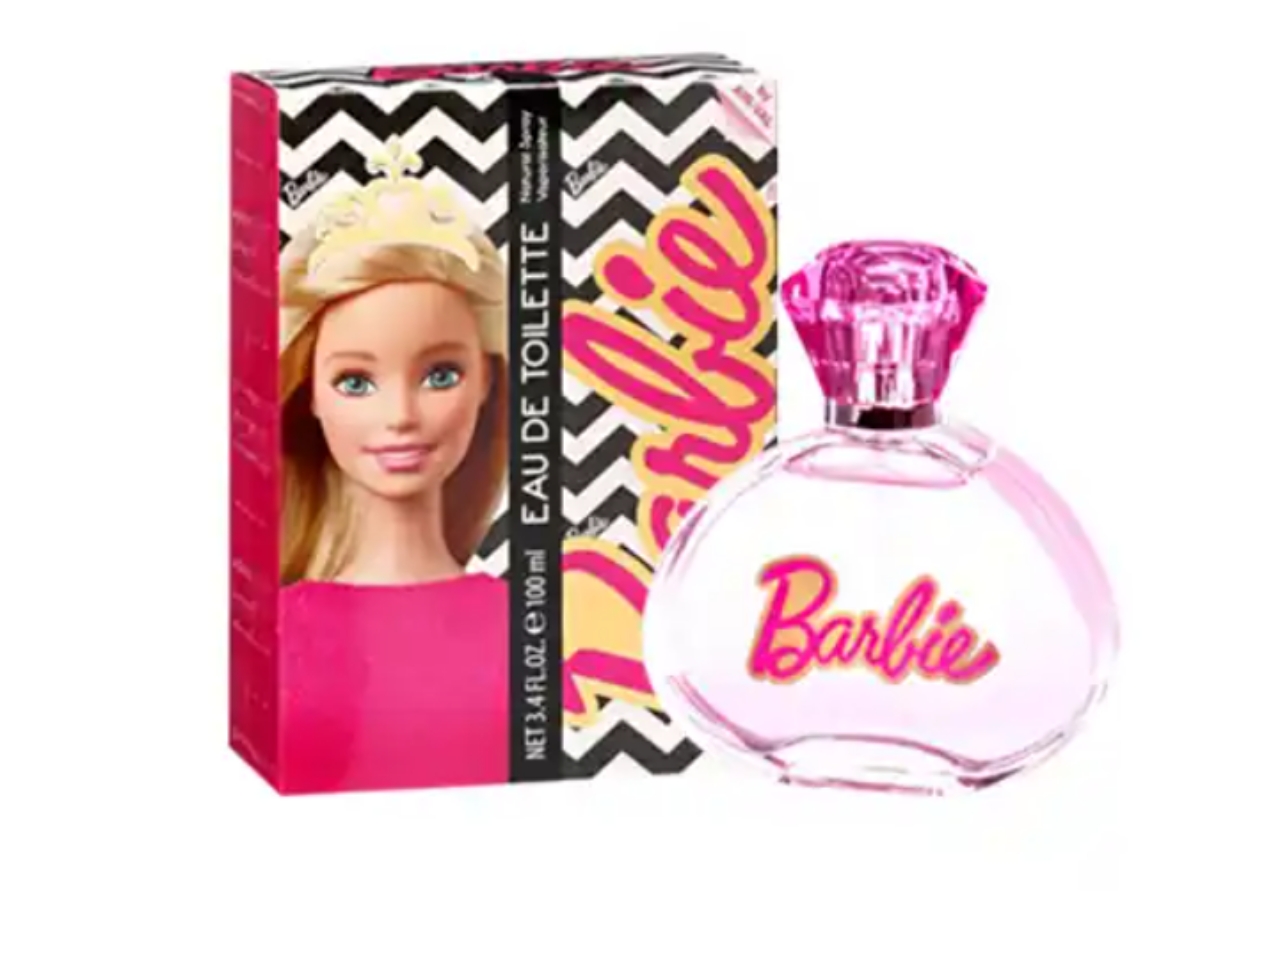 Barbie No. 1 Barbie Doll